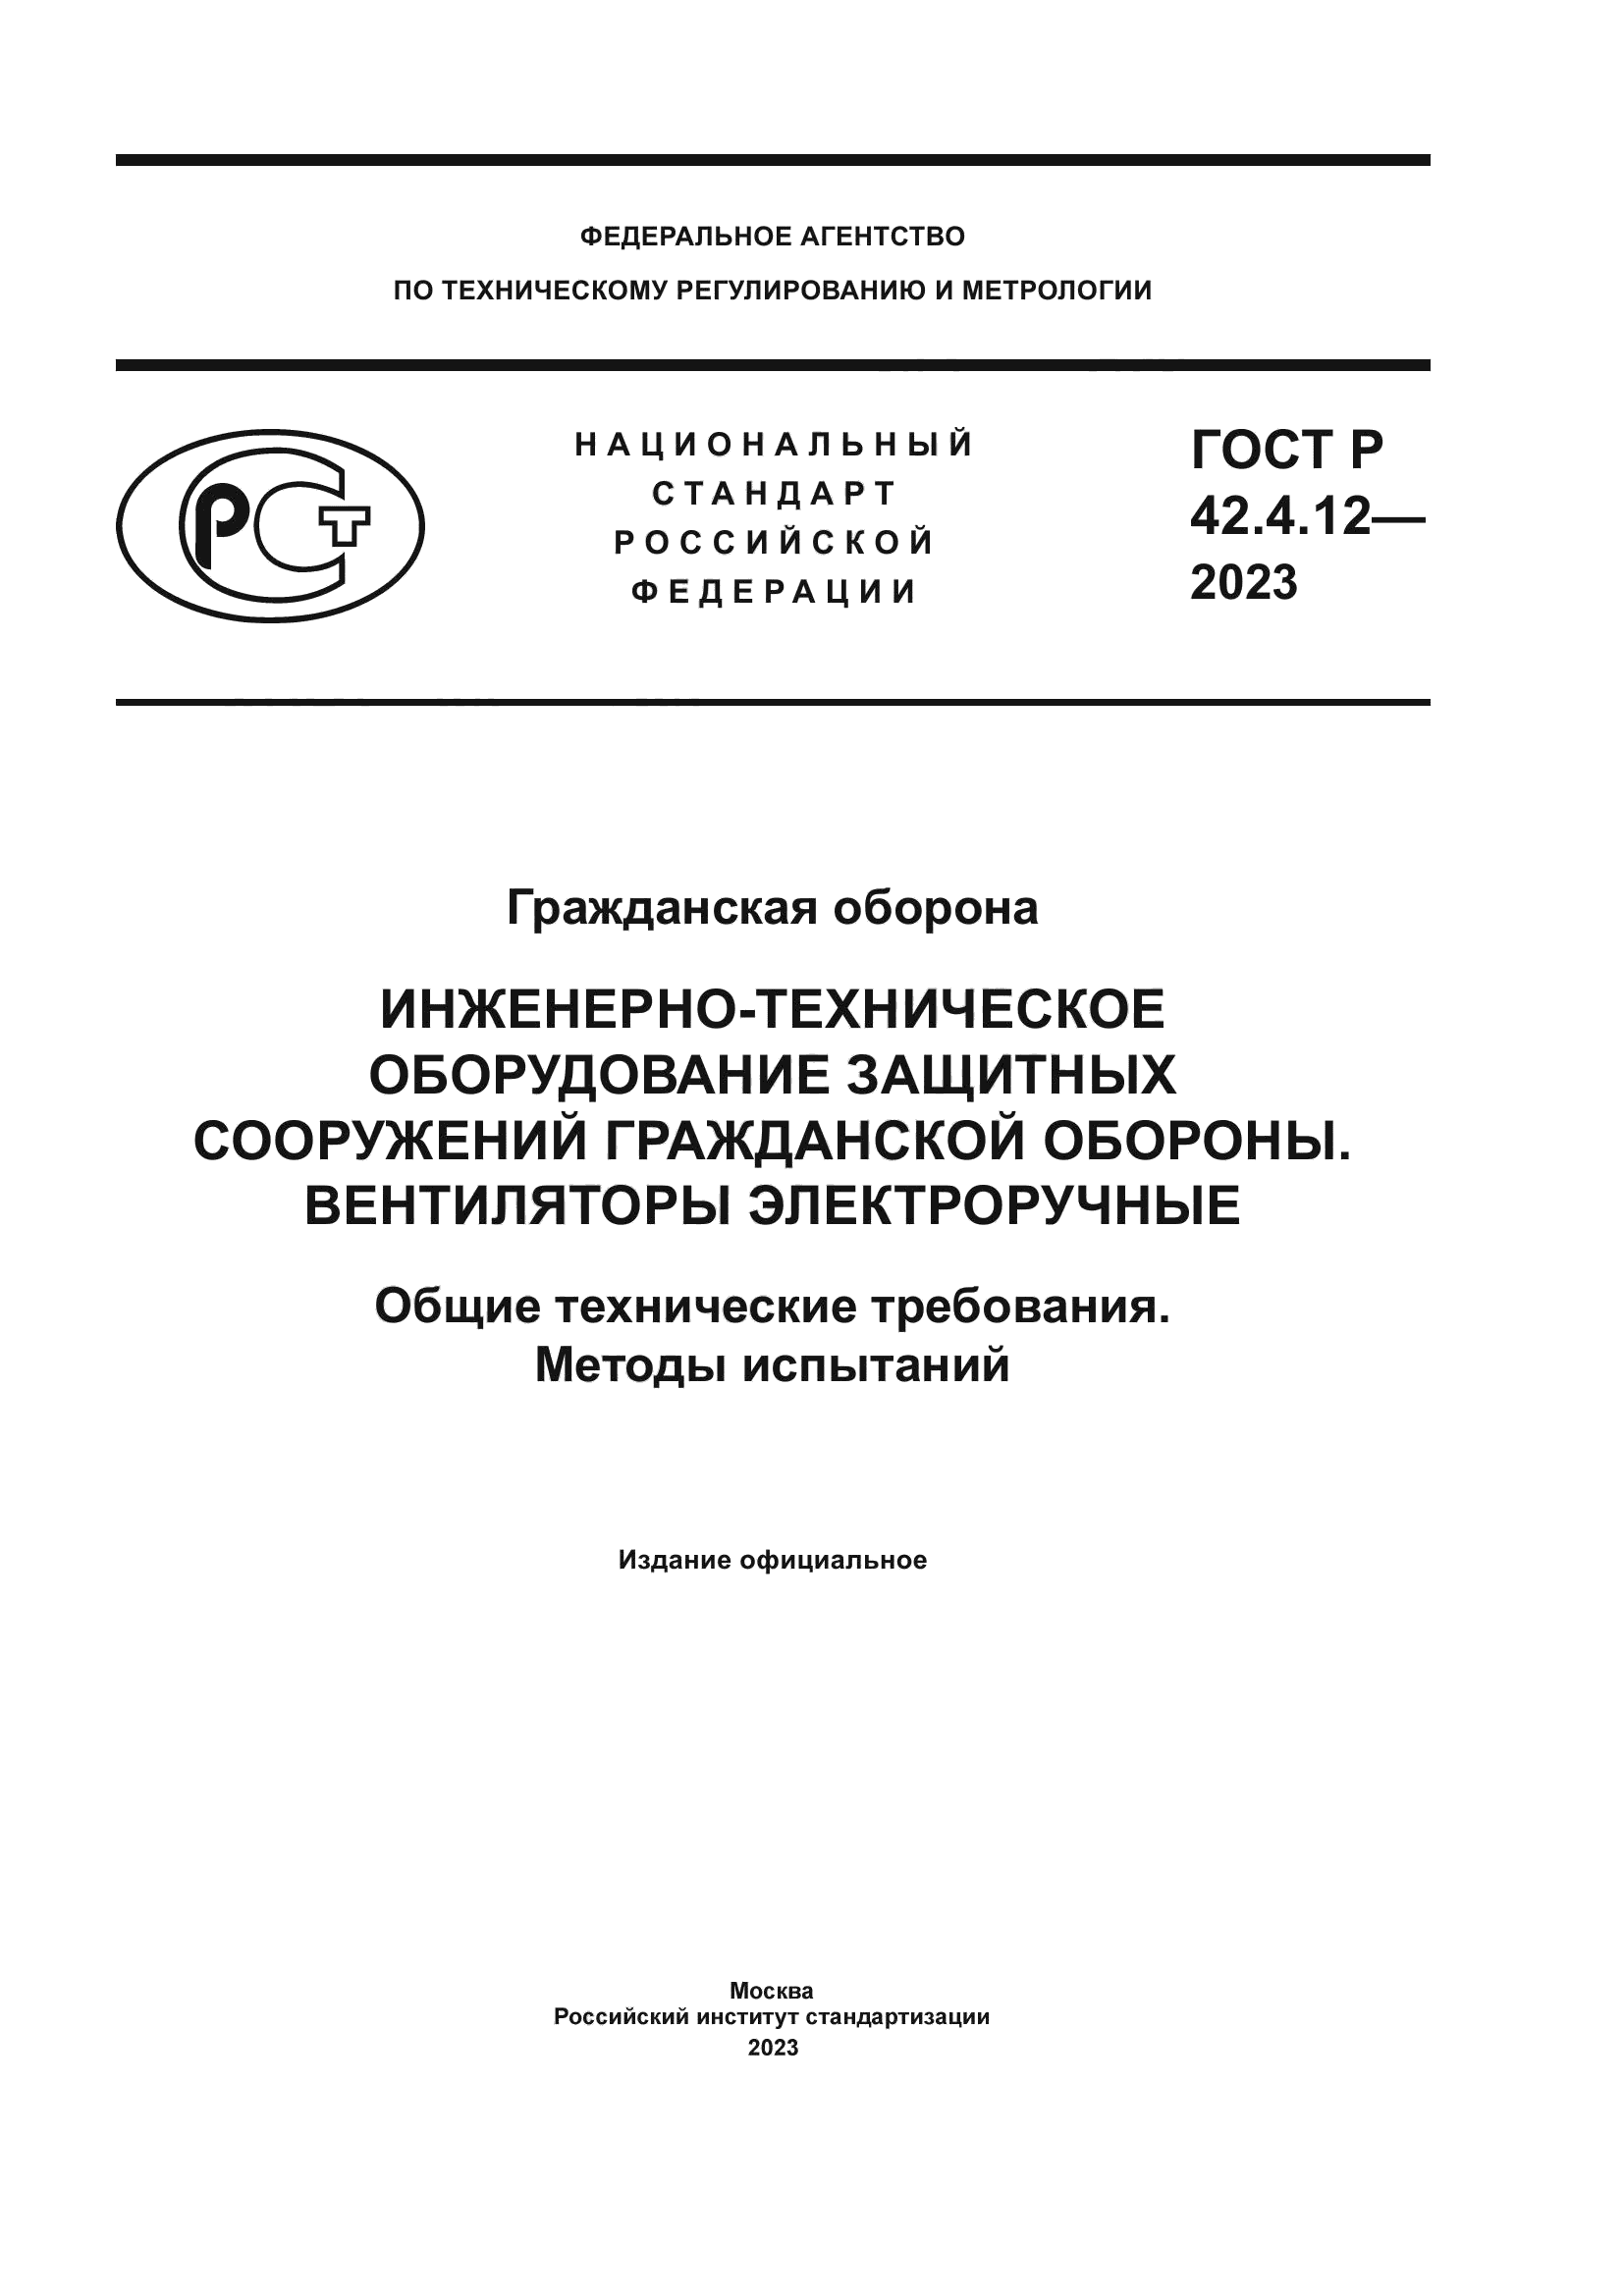 ГОСТ Р 42.4.12-2023